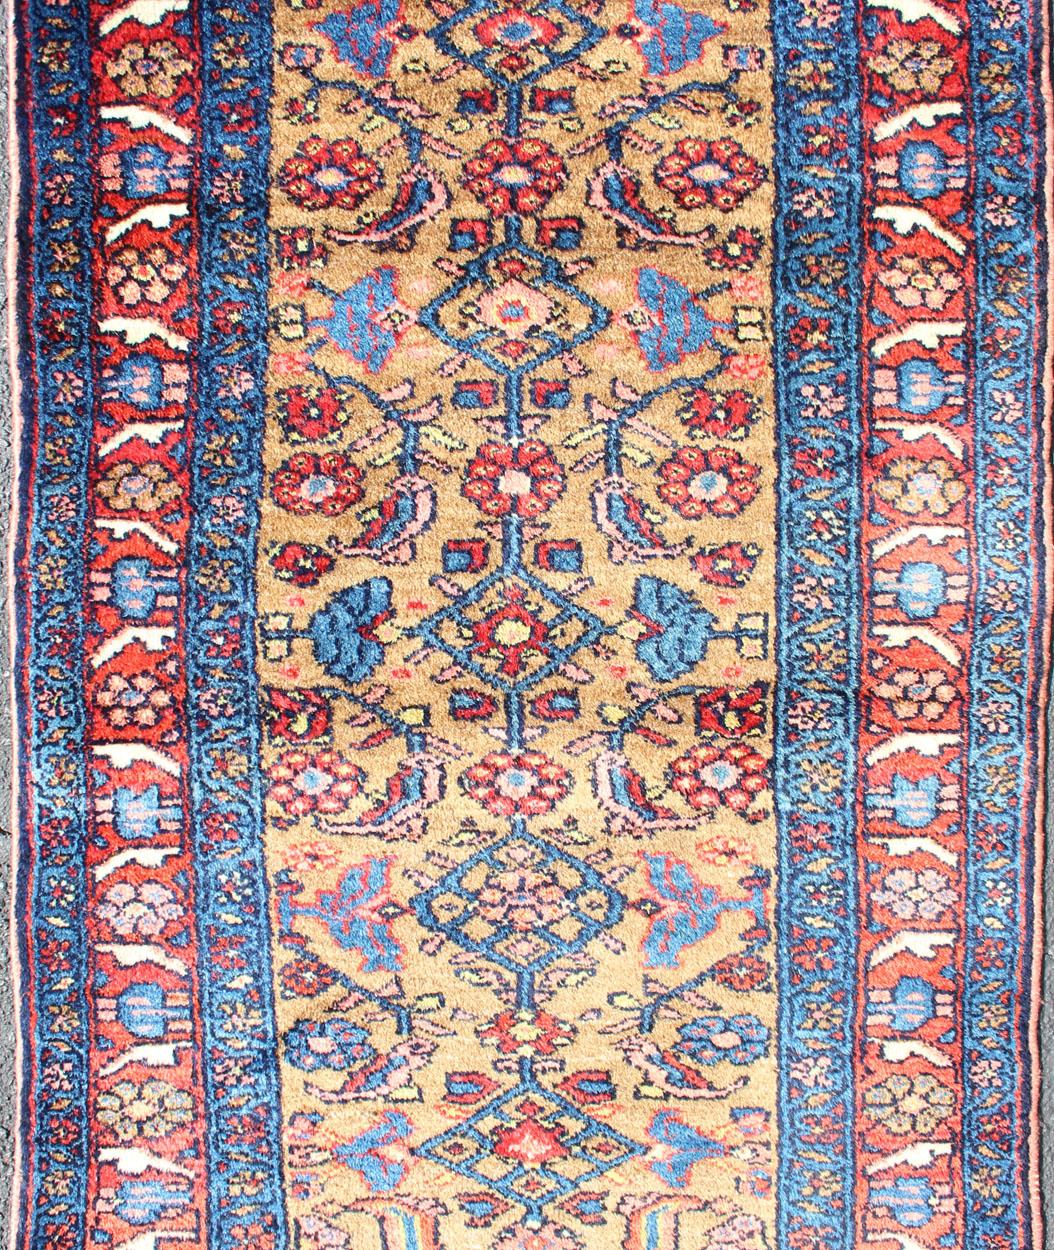 Antique Persian Hamadan rug in rich color tones and all over Herati geometric design, rug R20-0717-259 , country of origin / type: Iran / Hamadan, circa 1920.

This antique Persian Hamadan rug (circa early 20th century) features a unique blend of